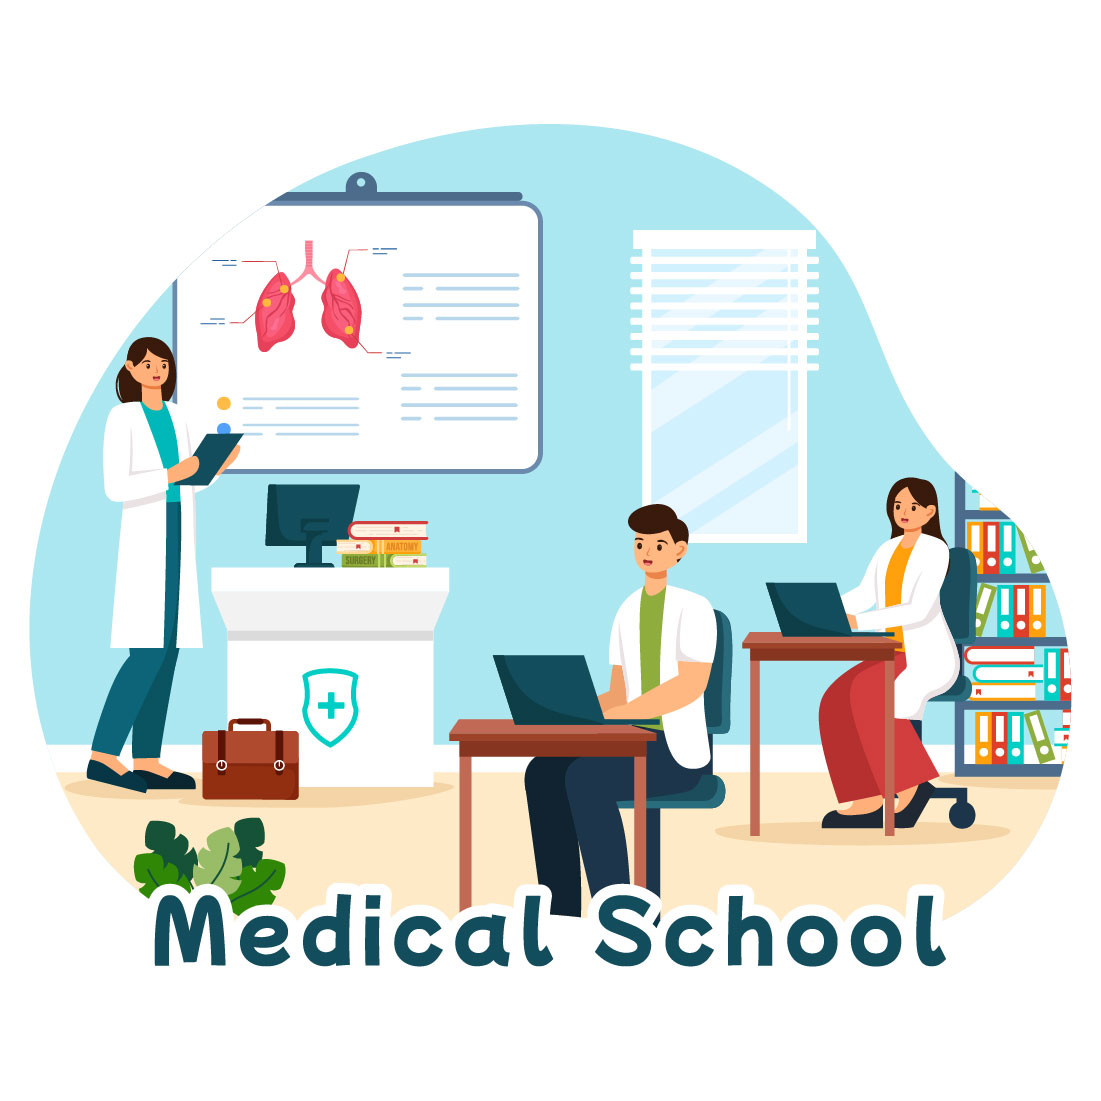 10 Medical School Illustration cover image.